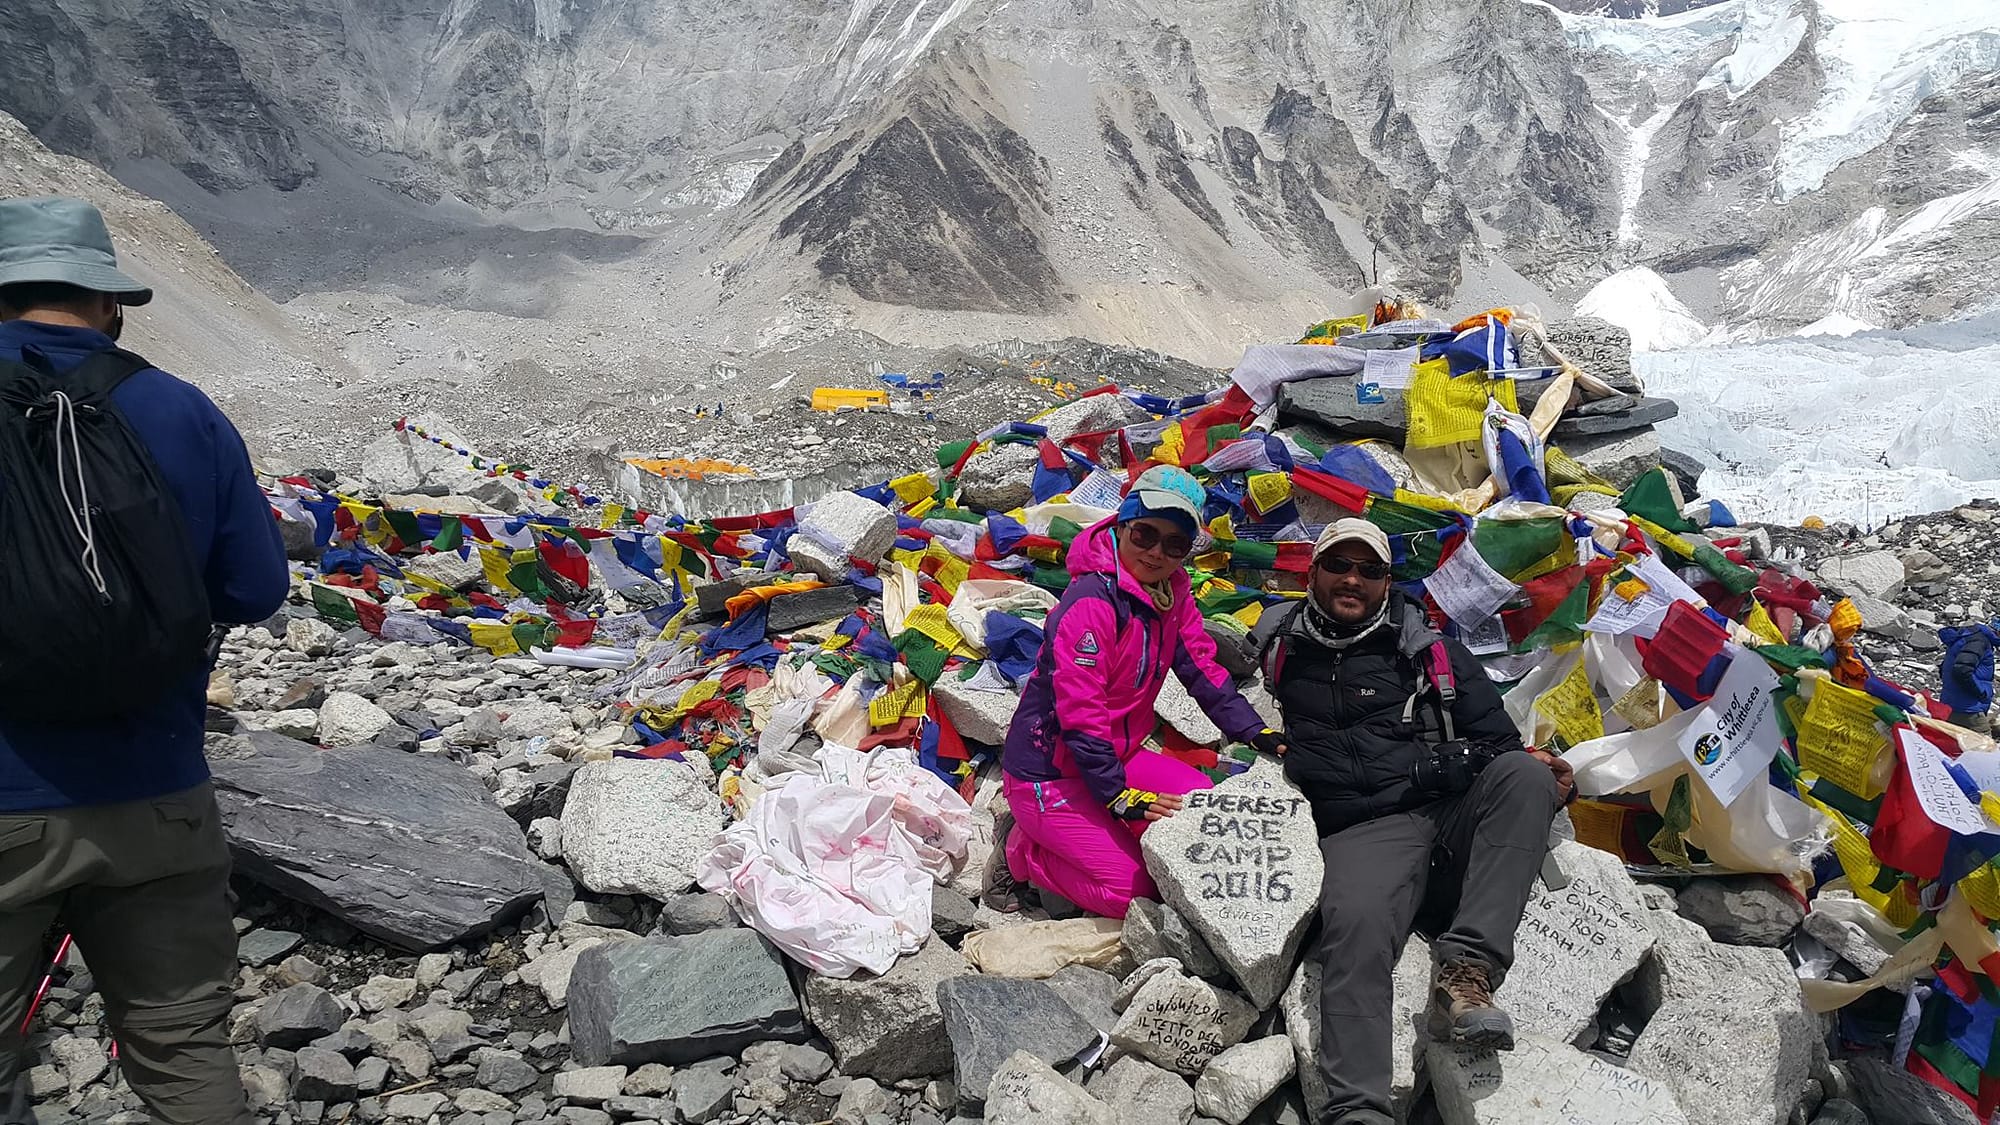 Everest Trekking Packages